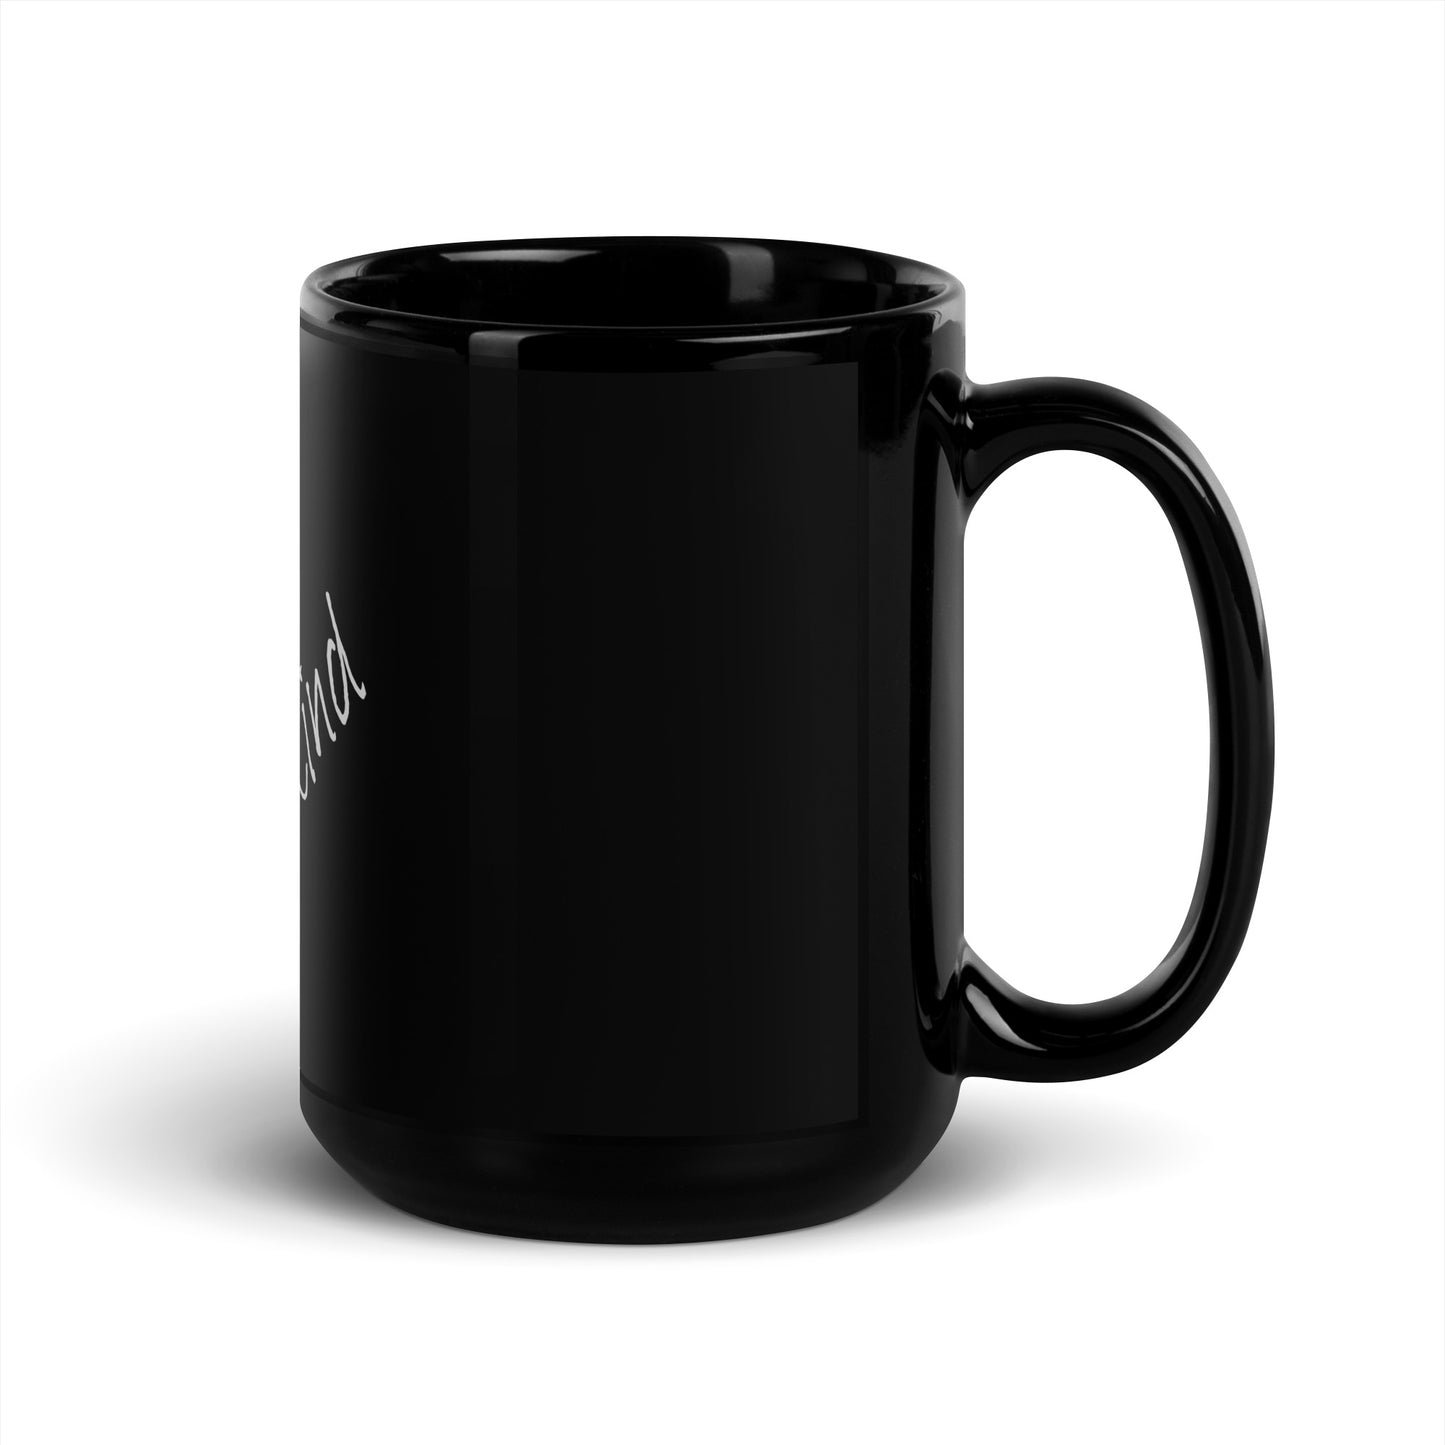 Be Kind Black Glossy Mug